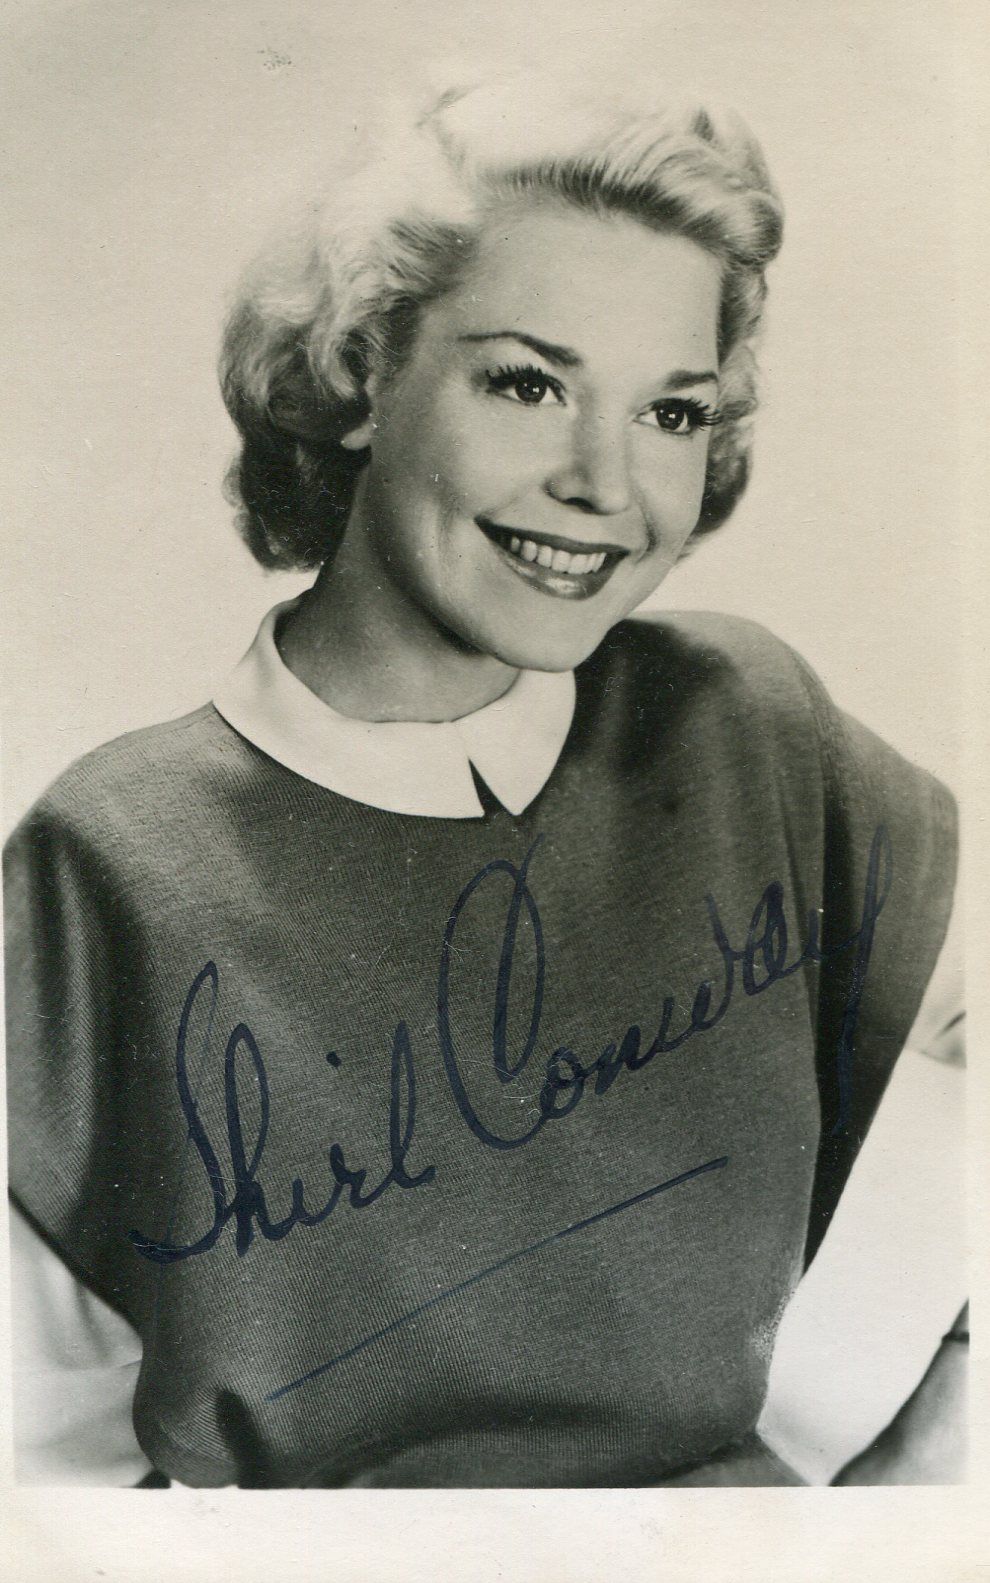 Shirl Conway